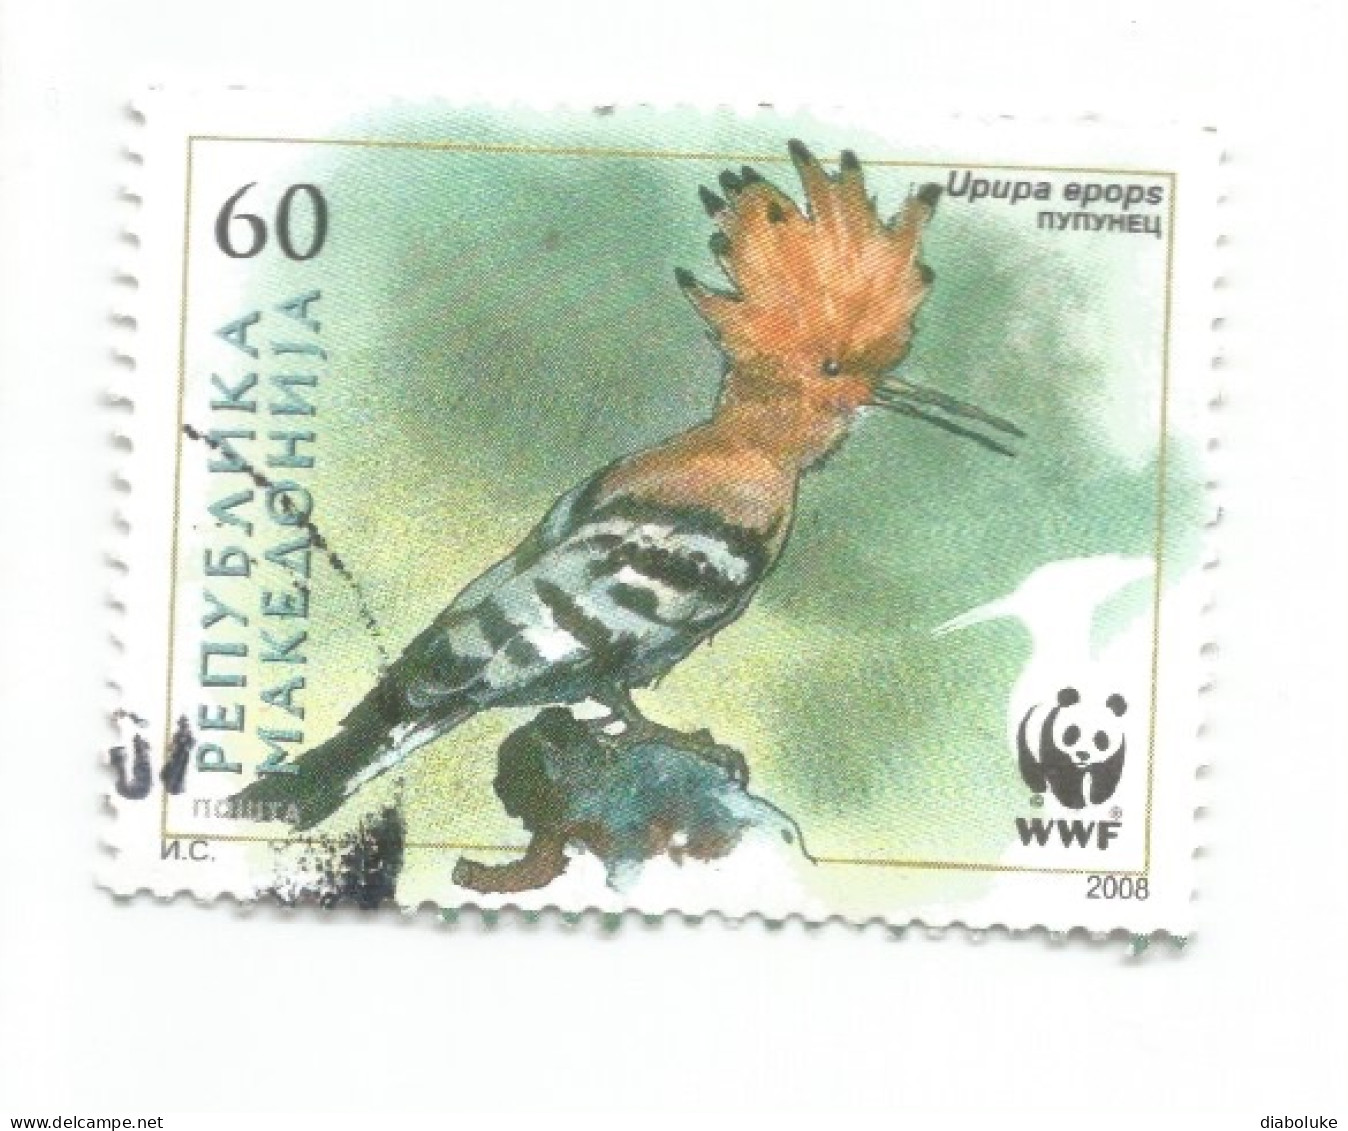 (MACEDONIA) 2006, WWF, EURASIAN HOOPOE, UPUPA EPOPS - Used Stamp - North Macedonia